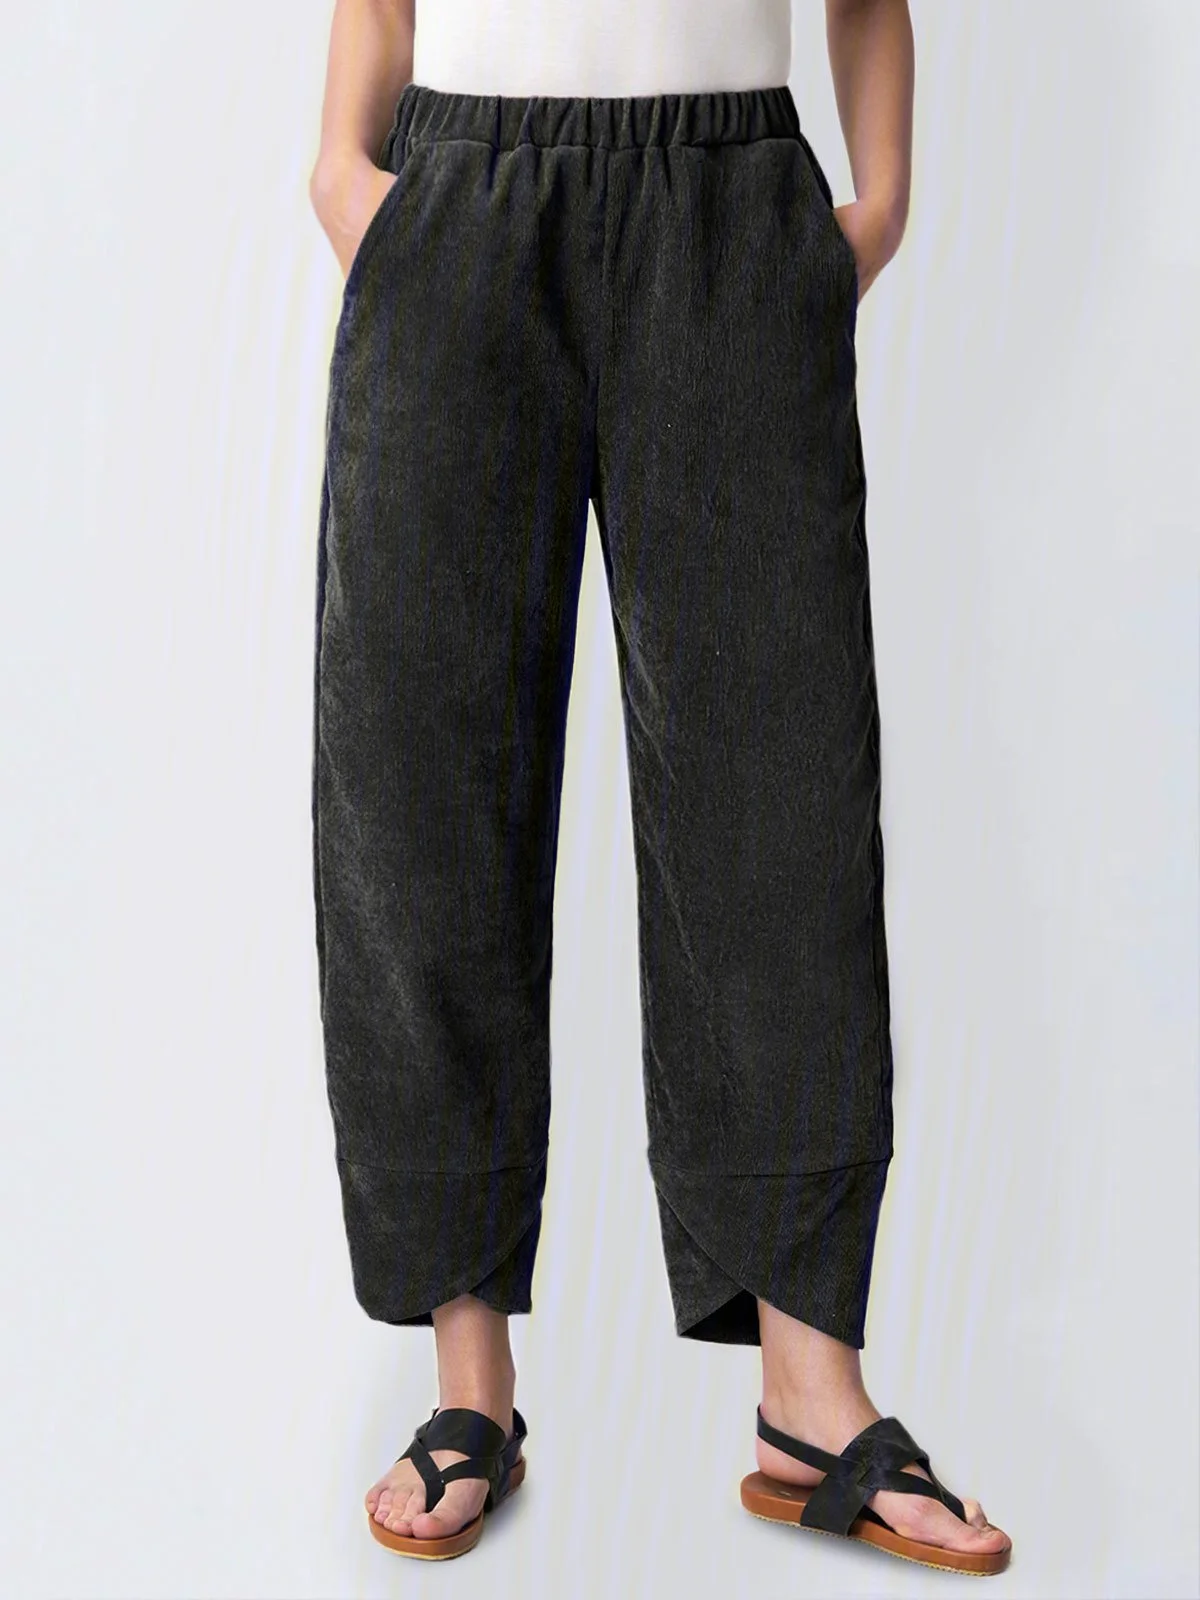 Women's Pants Trousers Tulip Hem Elastic Waist Pockets Baggy Full Length Workout Corduroy Pants Baggy Fashion